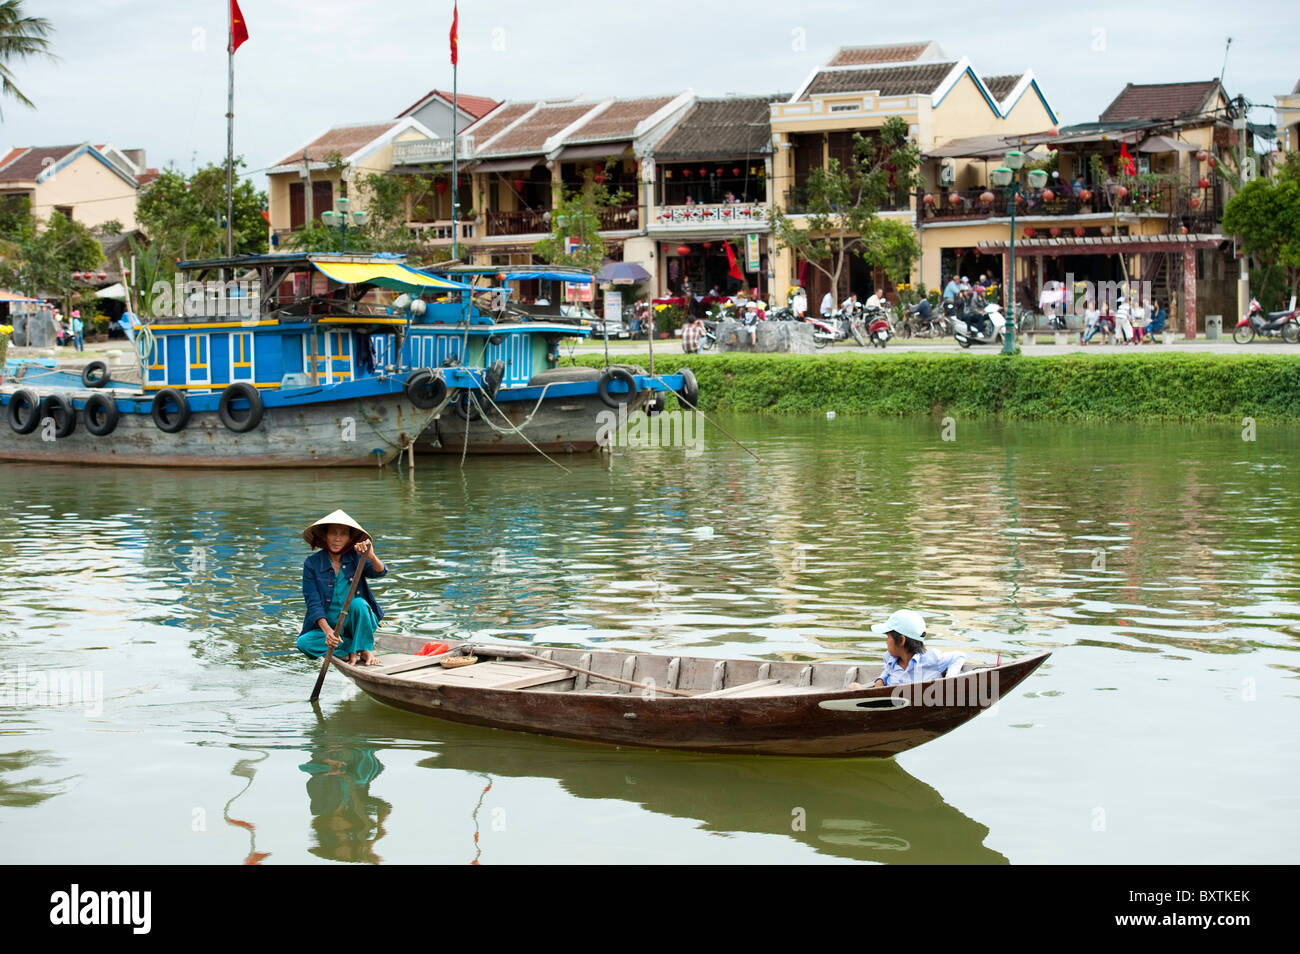 Canoe on the Thu Bon River, Hoi An, Vietnam Stock Photo